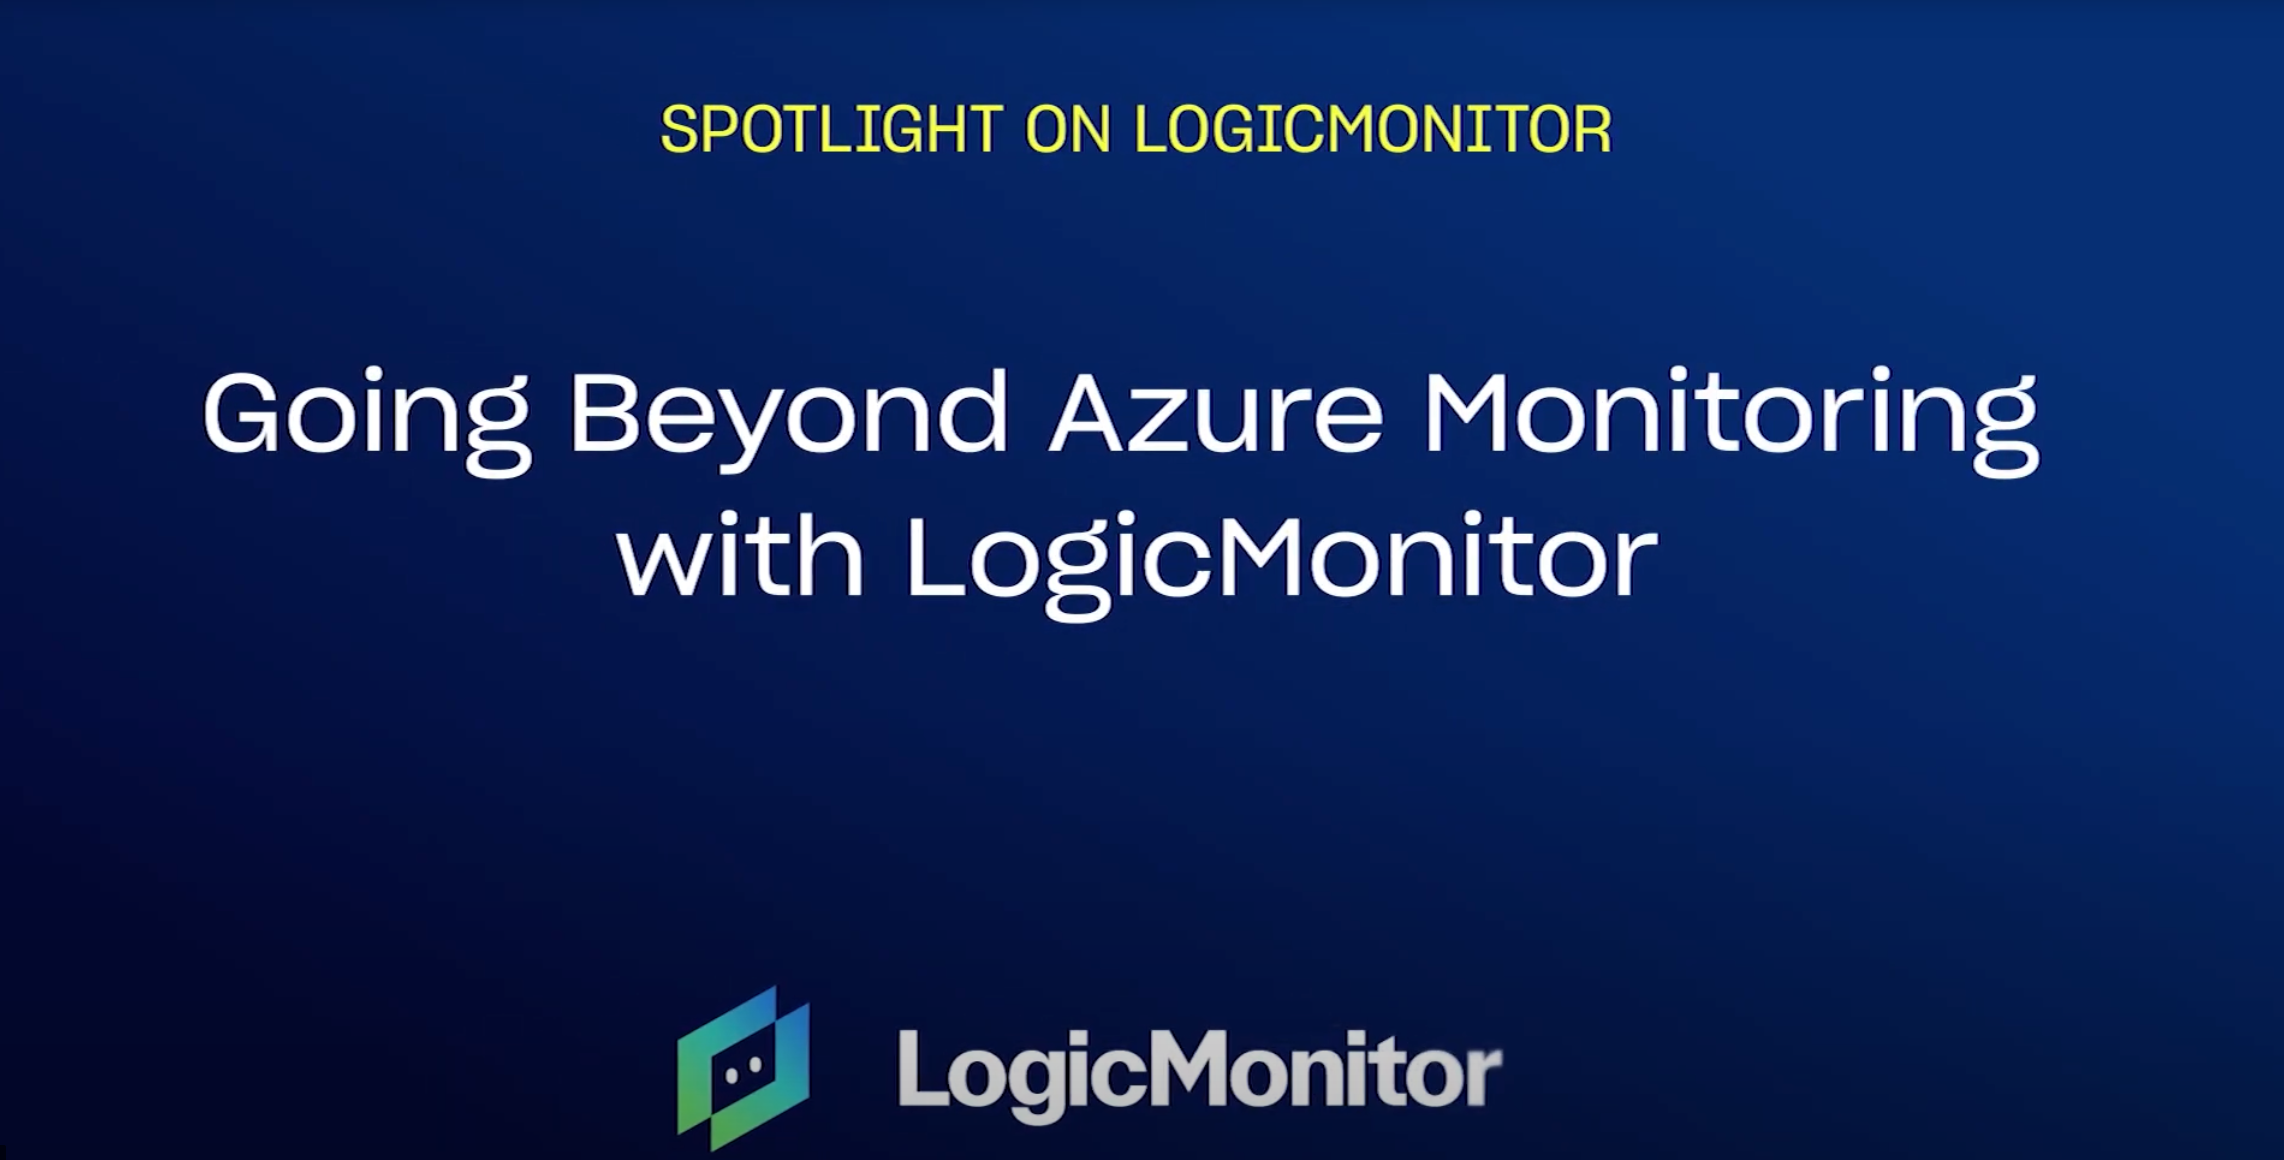 Going beyond Azure monitoring with LogicMonitor